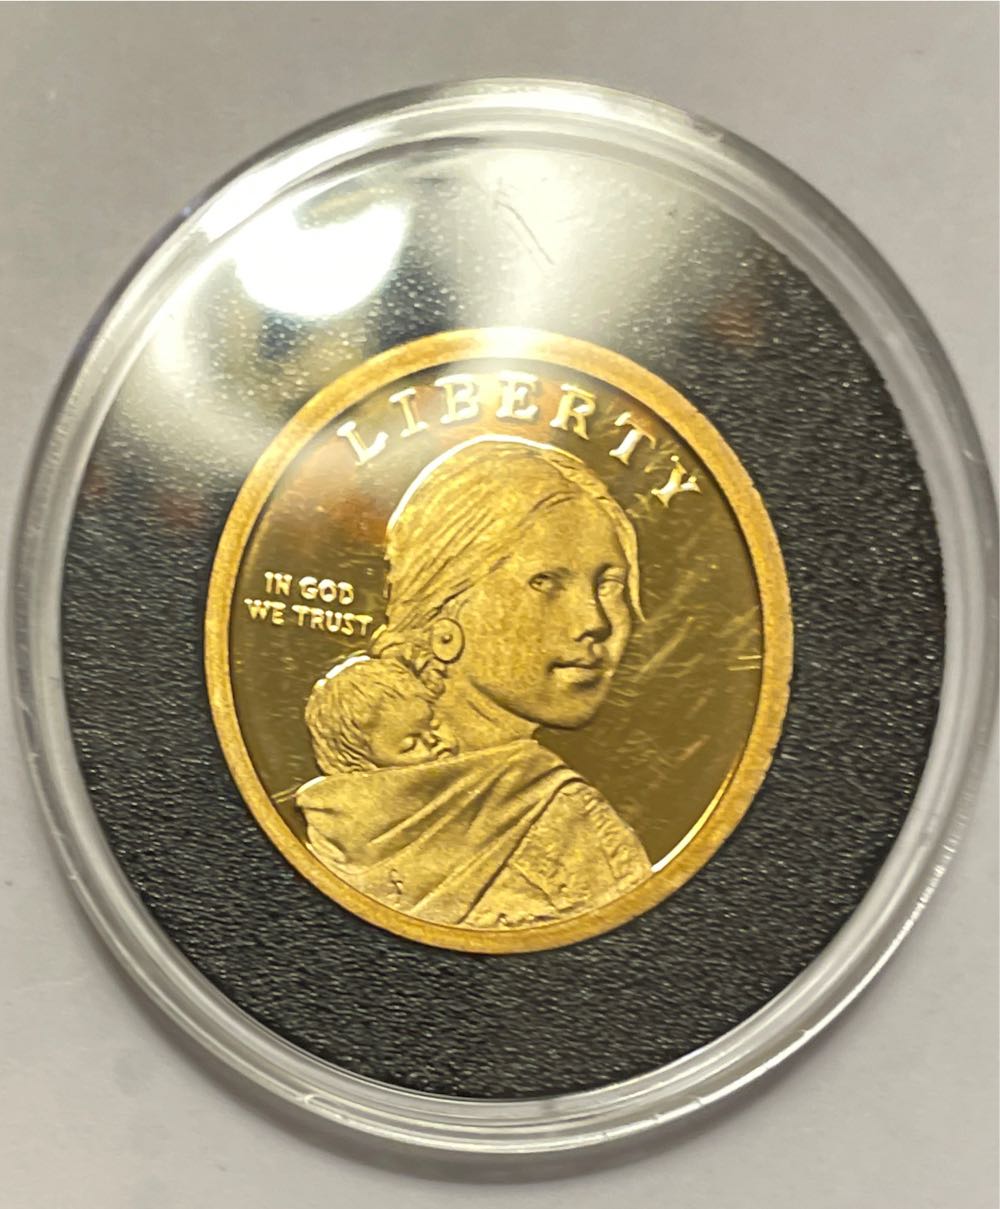 Sacagawea Dollar 2011 S Proof  coin collectible - Main Image 1